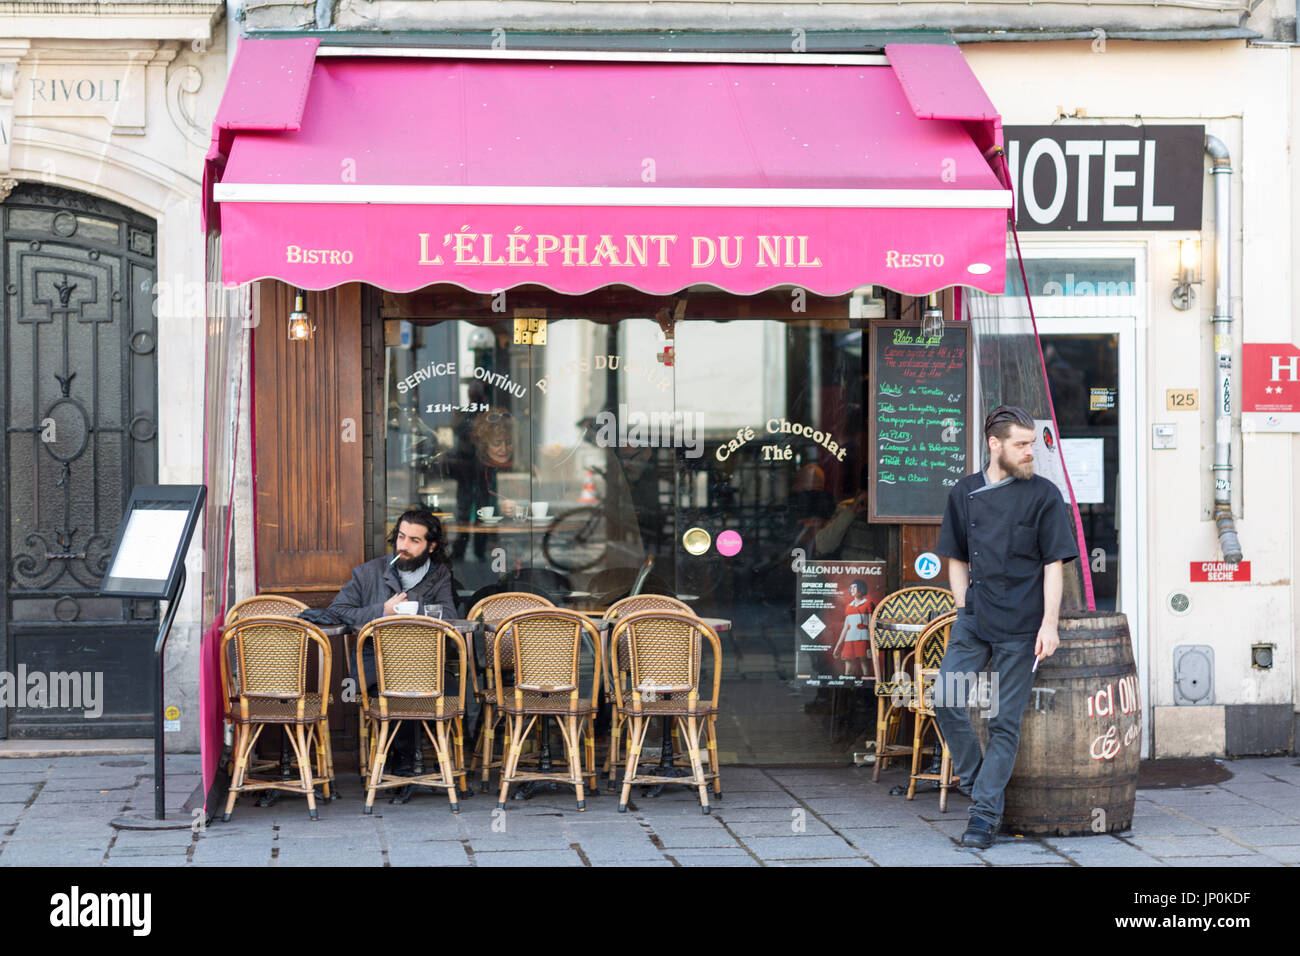 Paris, France - March 2, 2016: Waiter and customer smoking outside L'elephant du Nil restaurant on rue de Rivoli in the Marais, Paris, France. Stock Photo